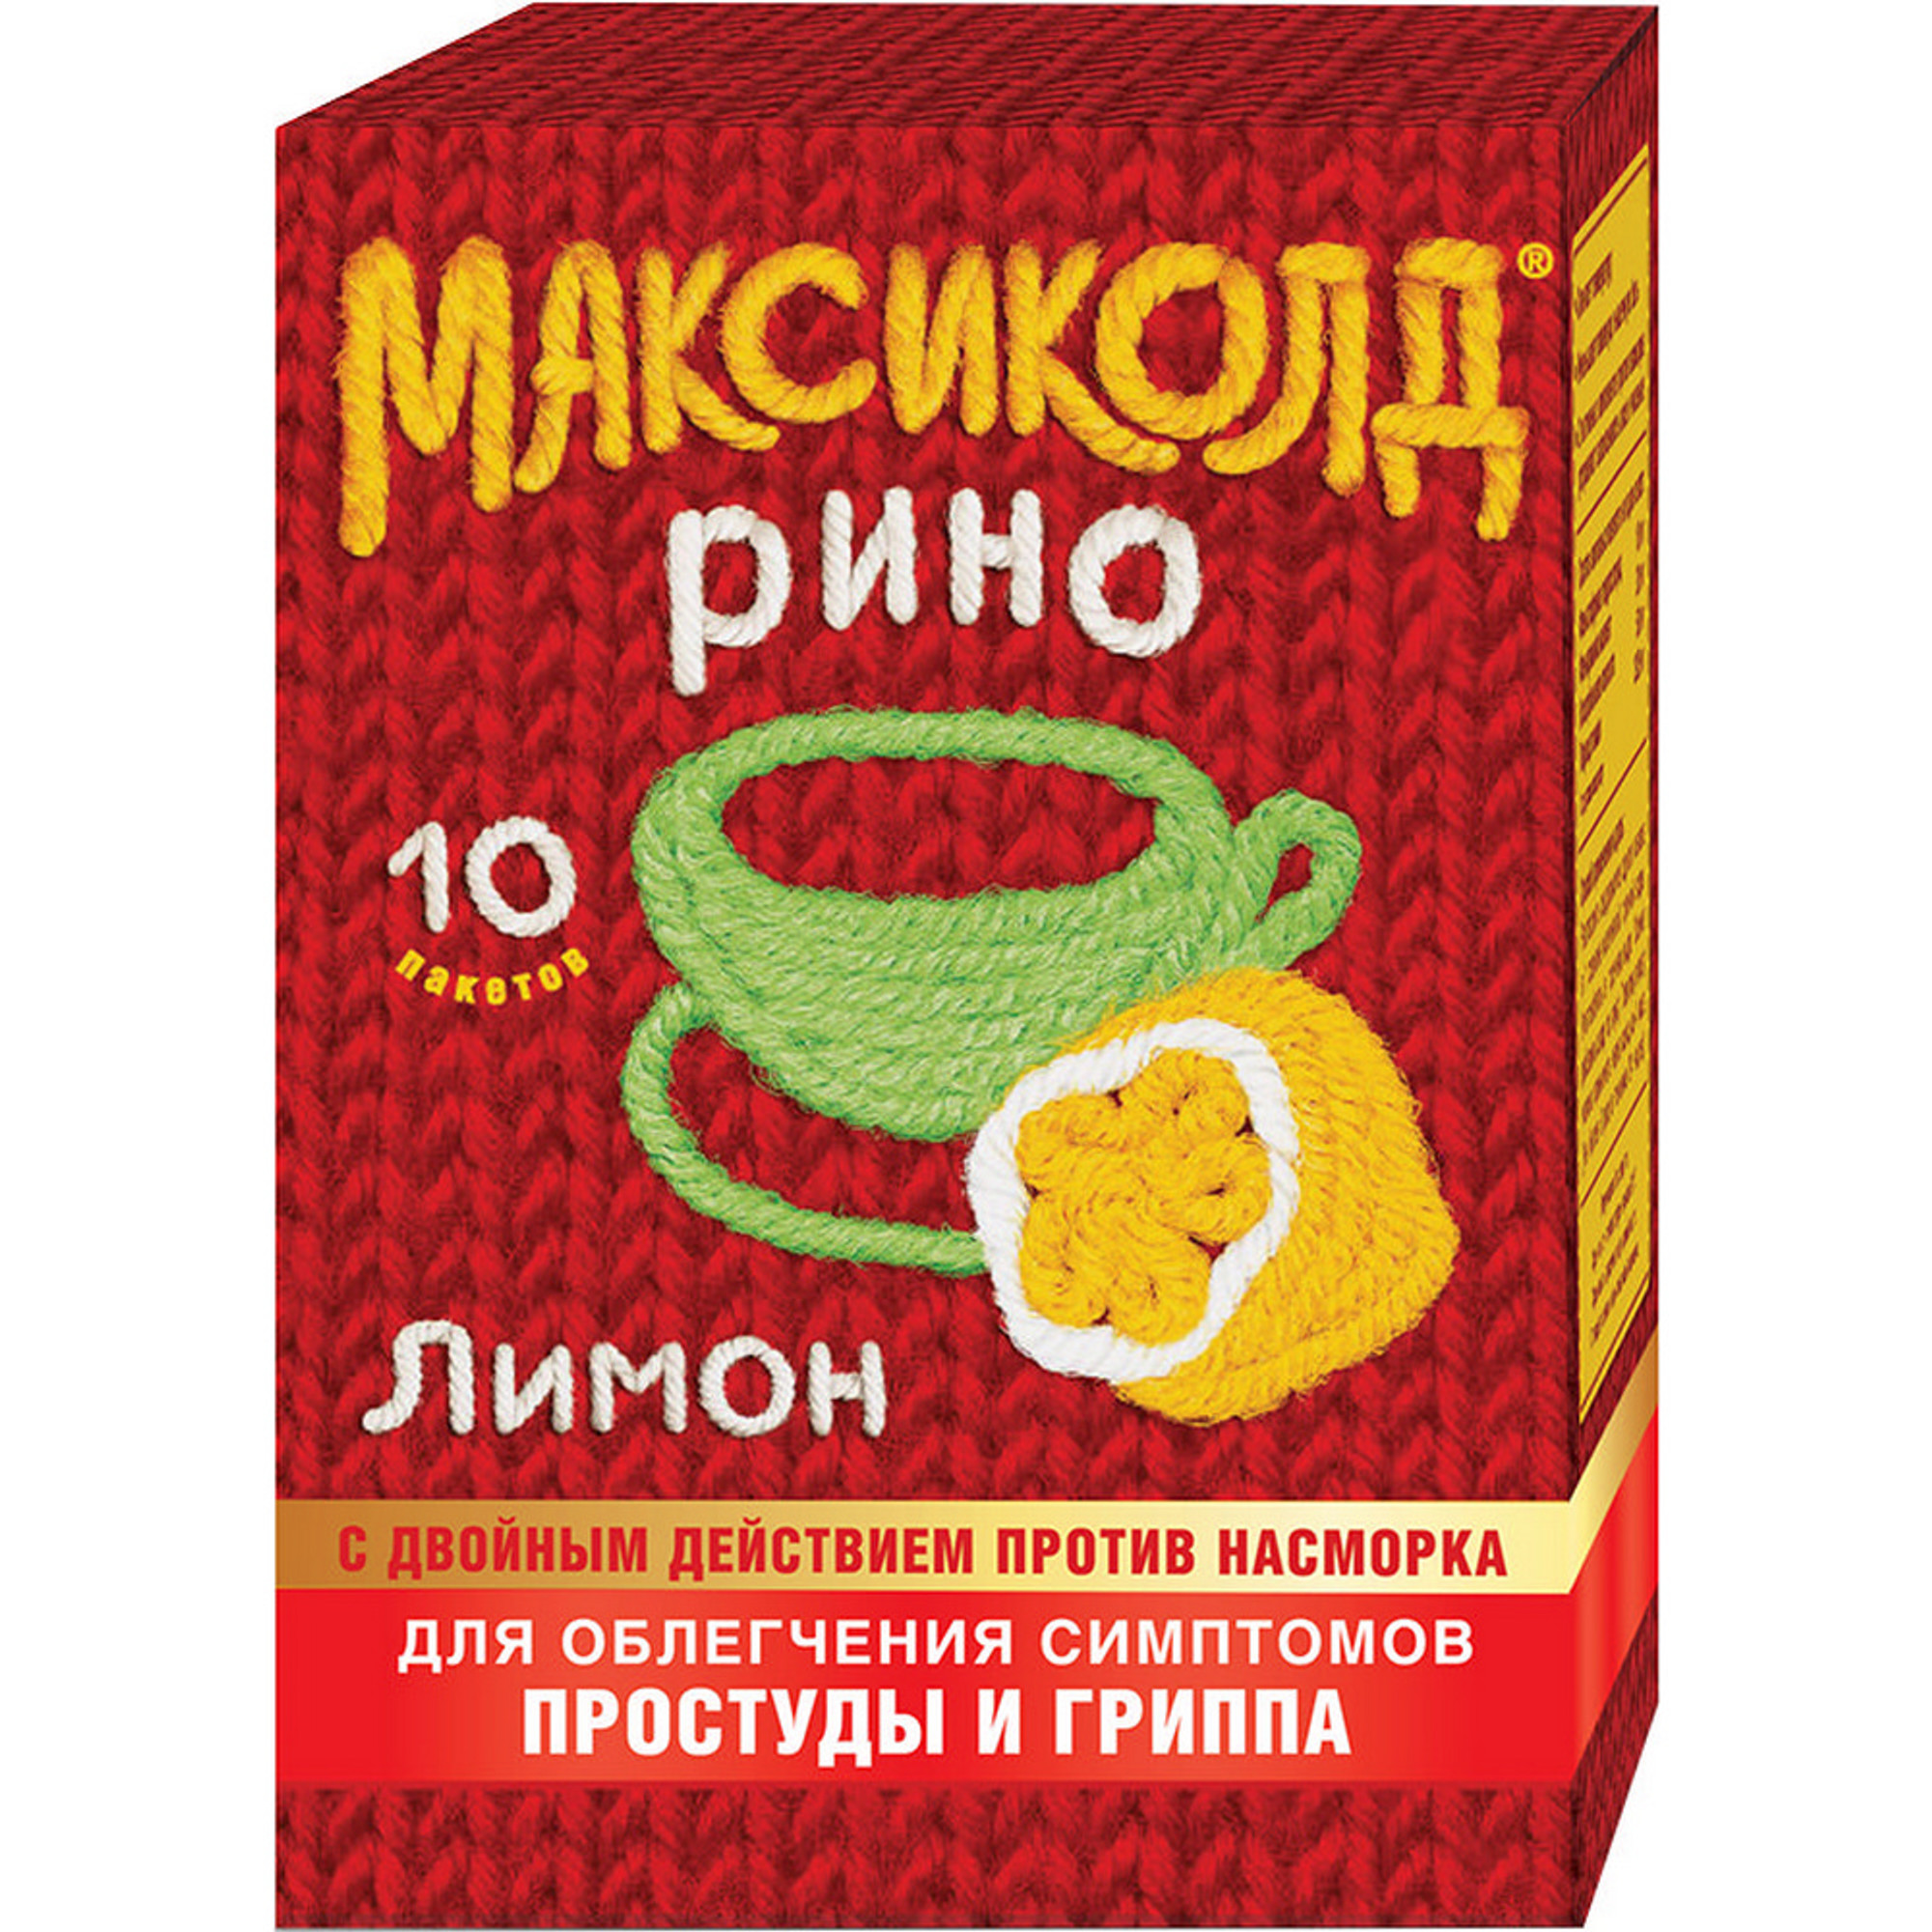 Максиколд Рино, порошок (лимон), пакетики 15 г, 10 шт. дона порошок 1500 мг пакетики 20 шт